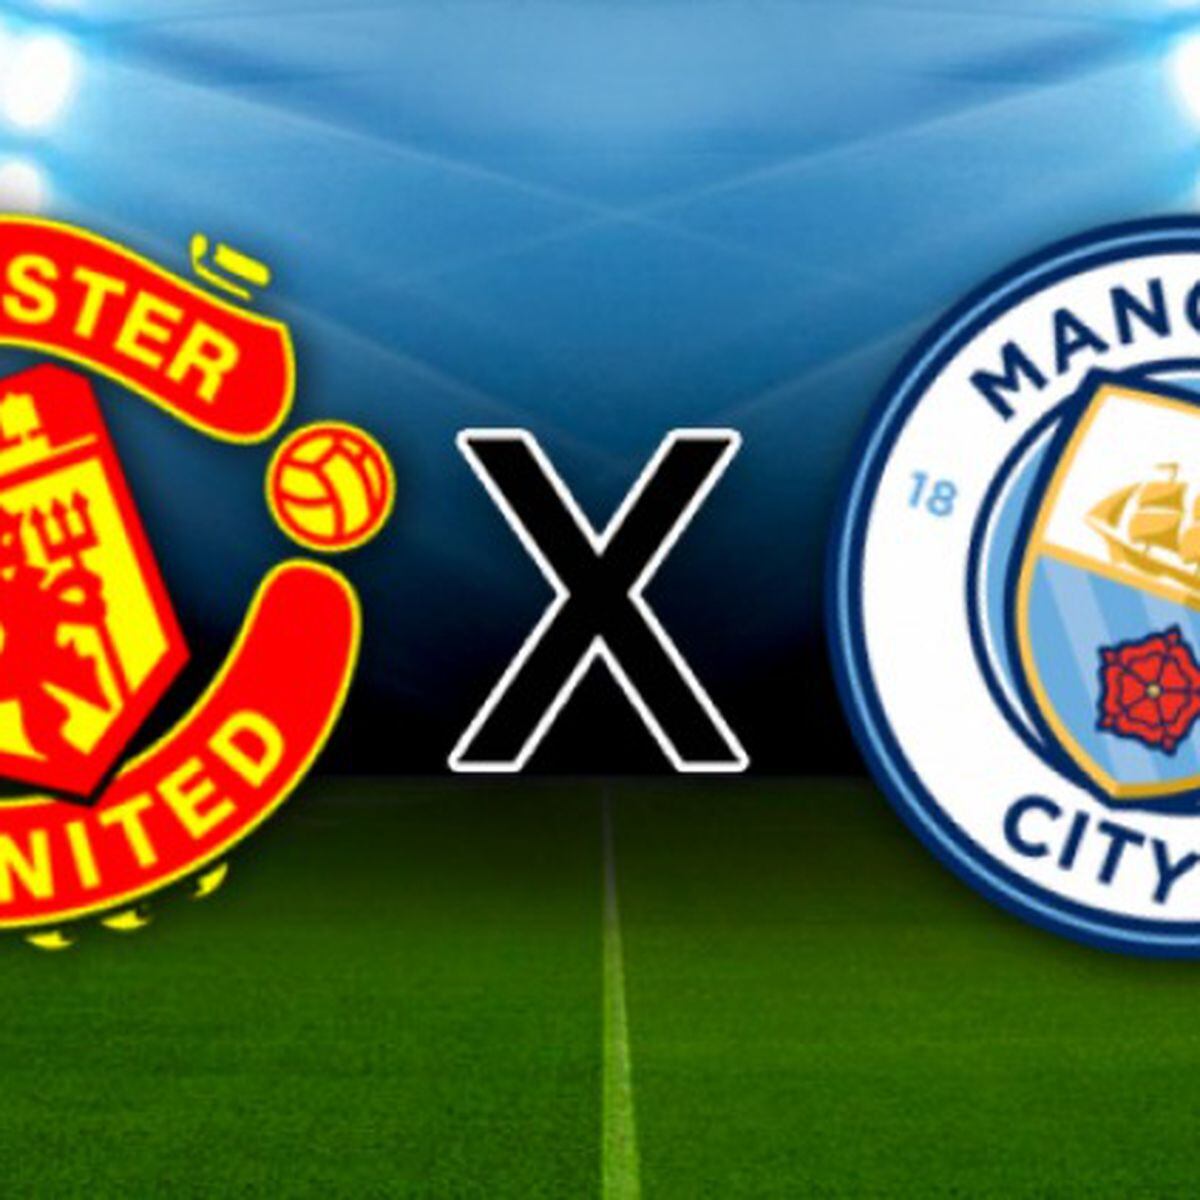 Manchester City x Manchester United ao vivo e online, onde